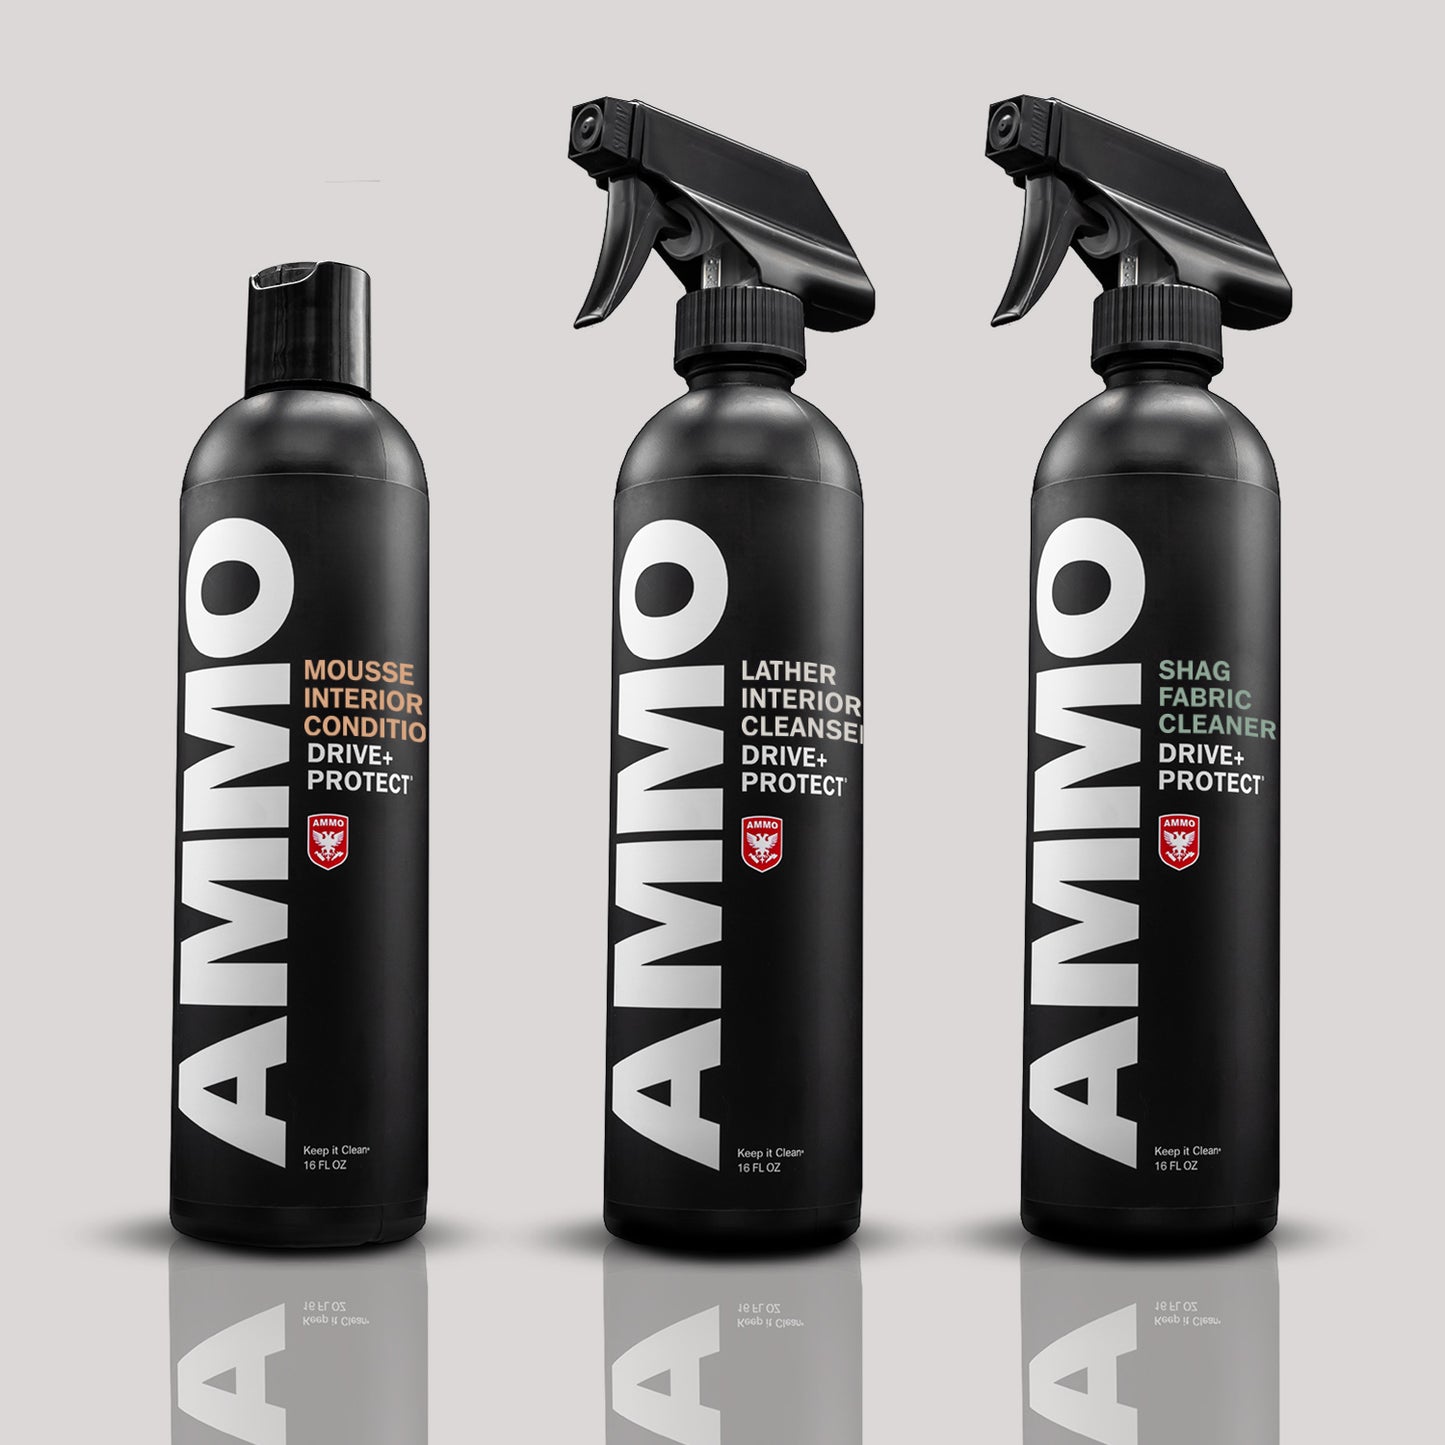 AMMO Dual Density Interior Brush – AMMONYC